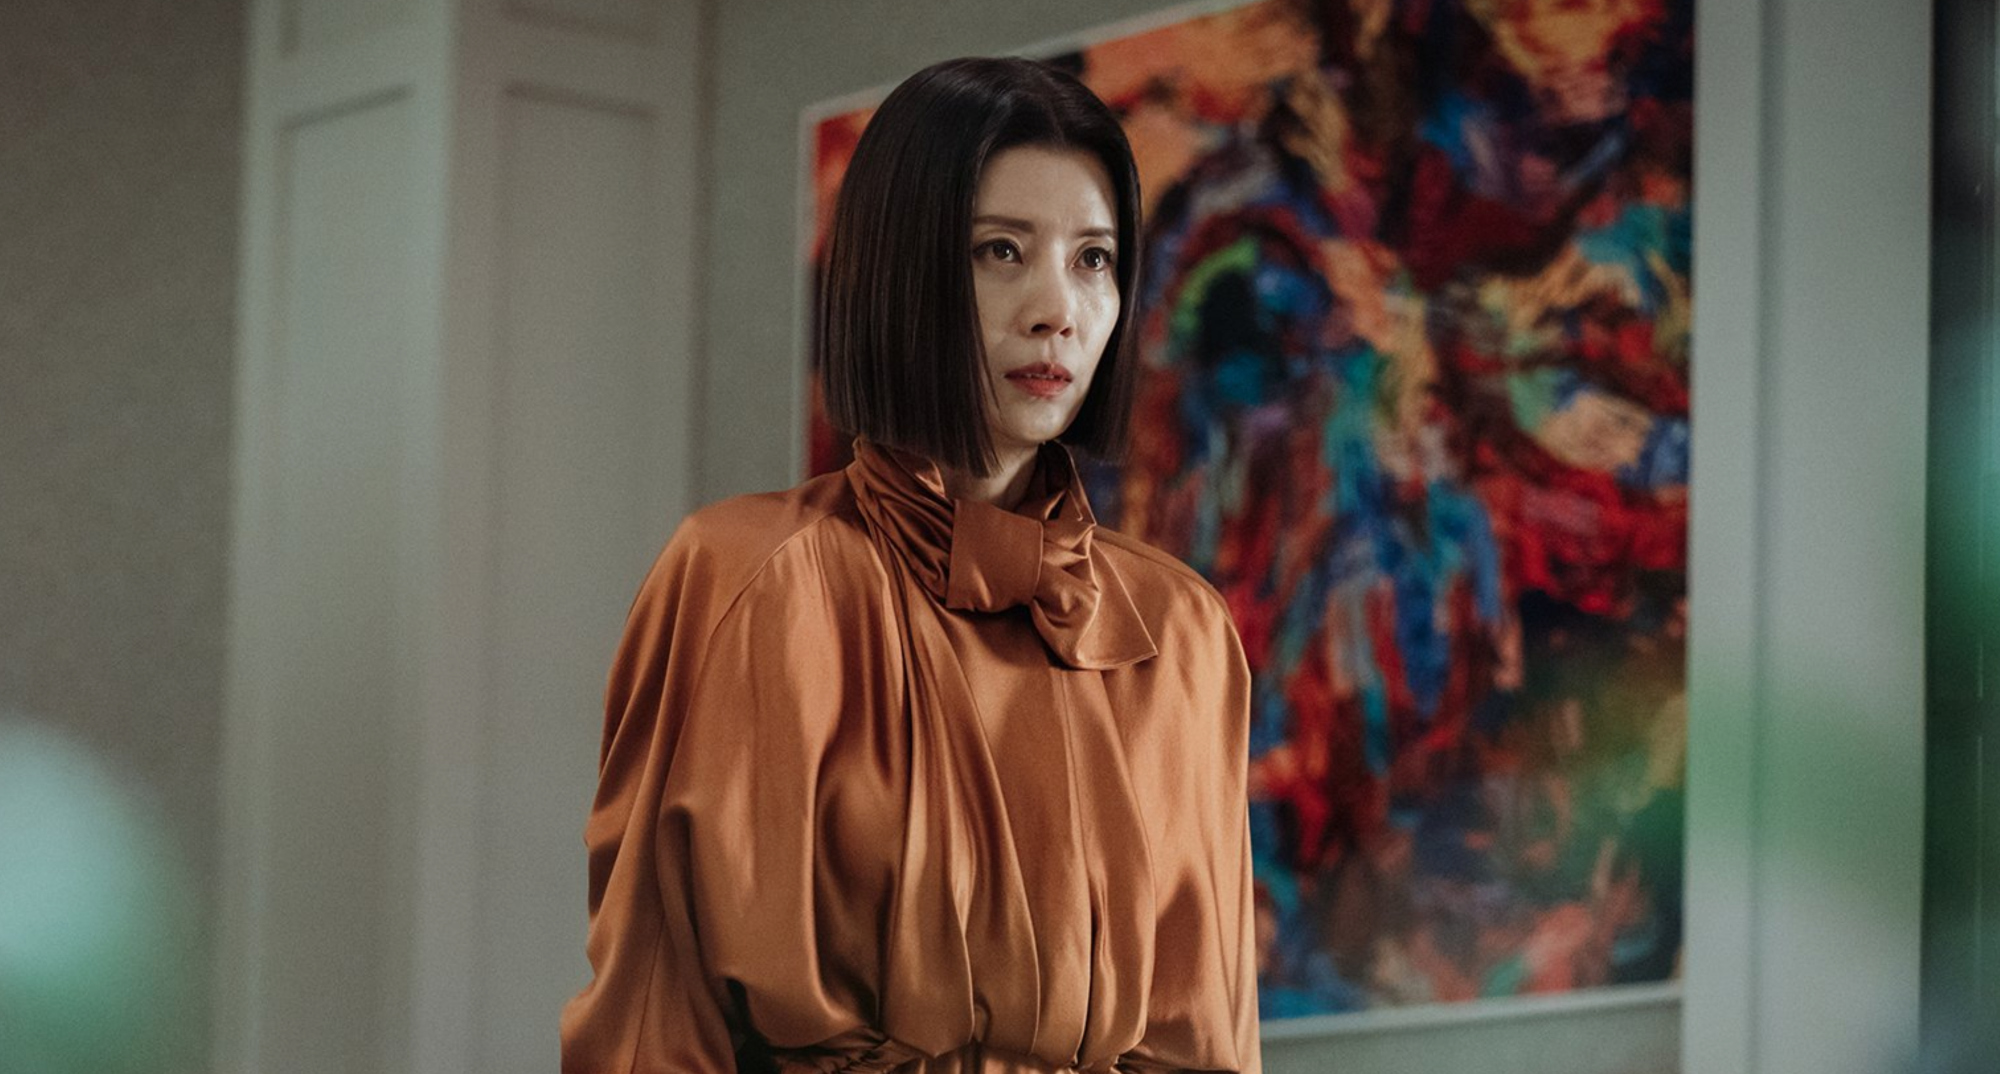 Actor Yoo-sun as So-ra in 'Eve' Episode 6 wearing an orange dress.